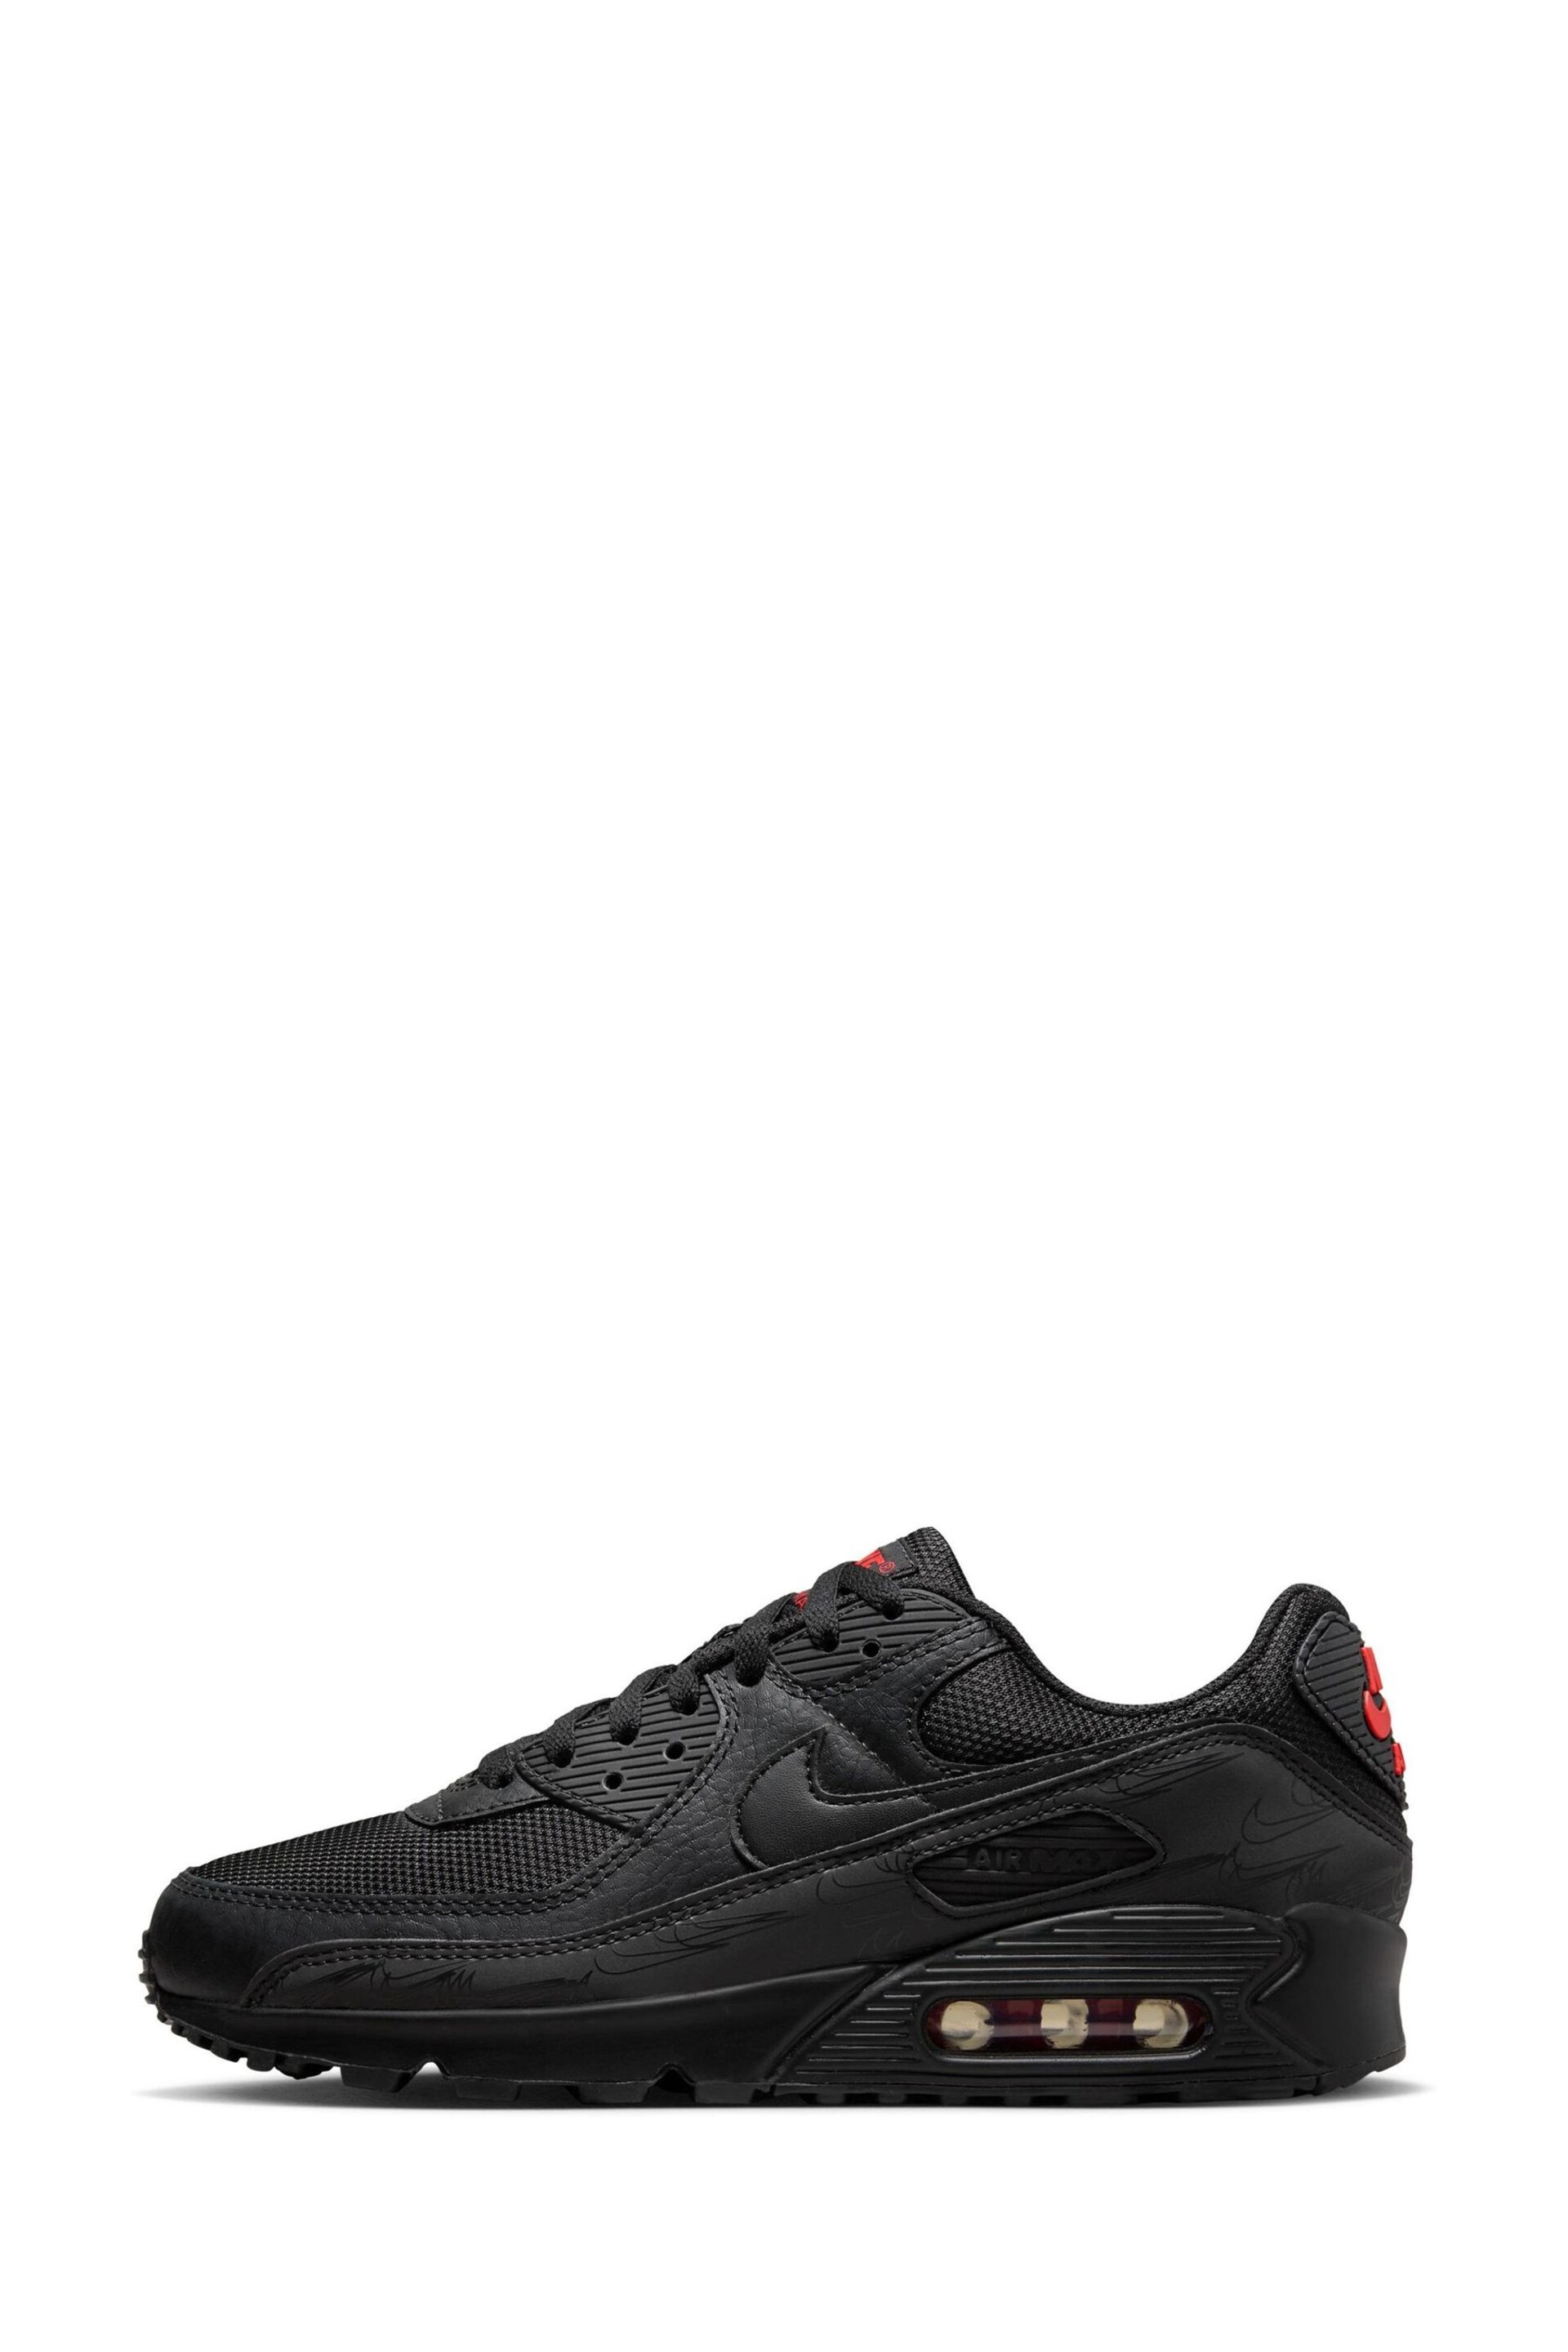 Nike Black/Grey Air Max 90 Trainers - Image 4 of 10